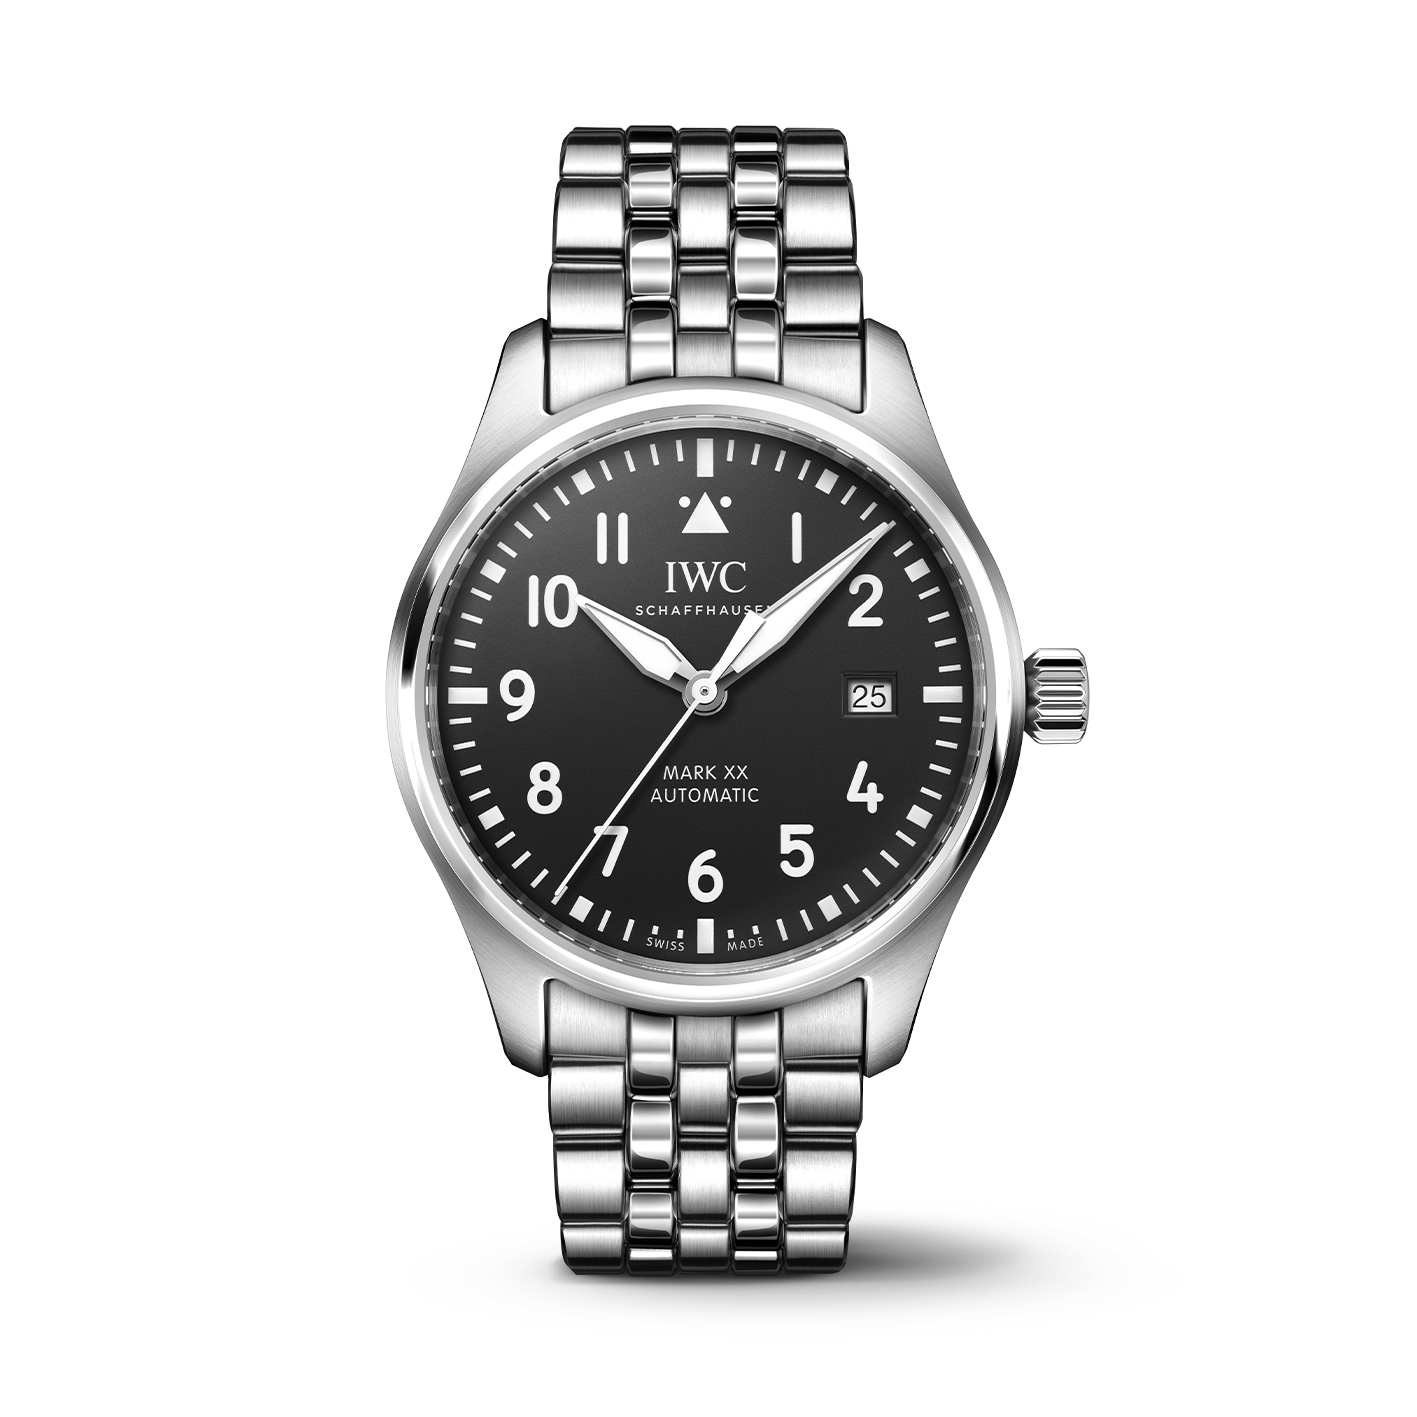 Pilot's Watches Mark XX1